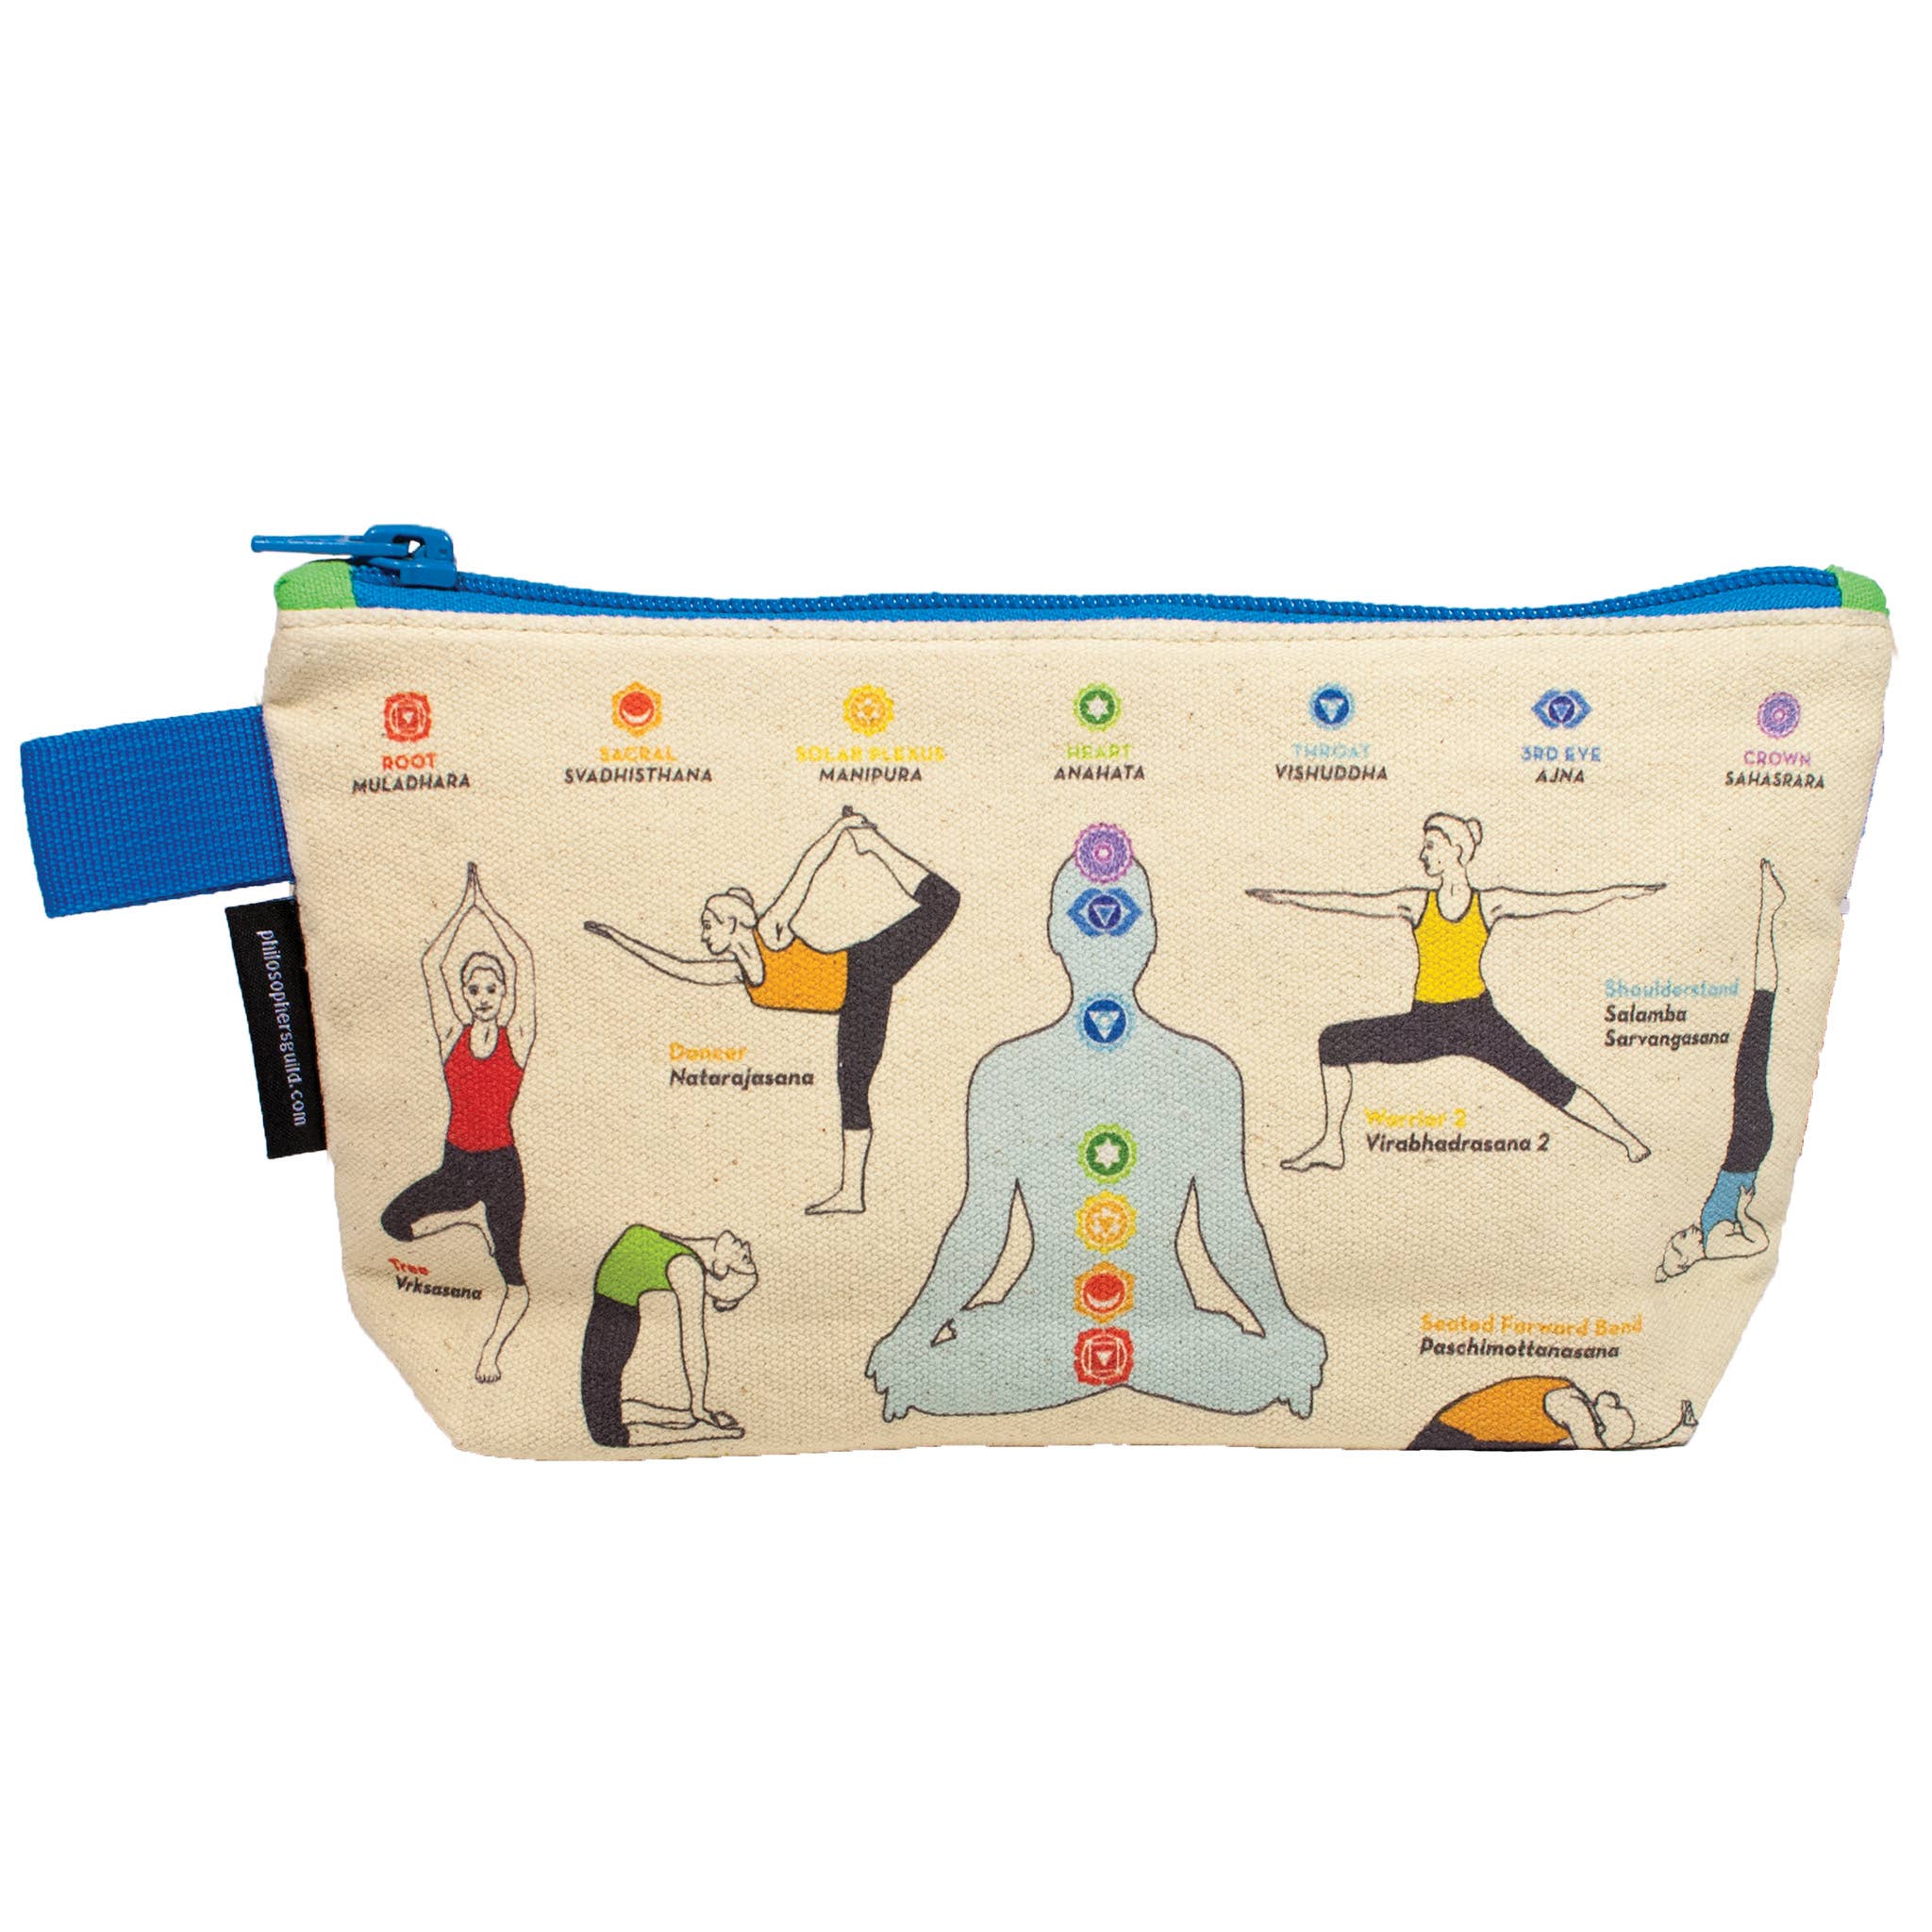 yoga bags wholesale